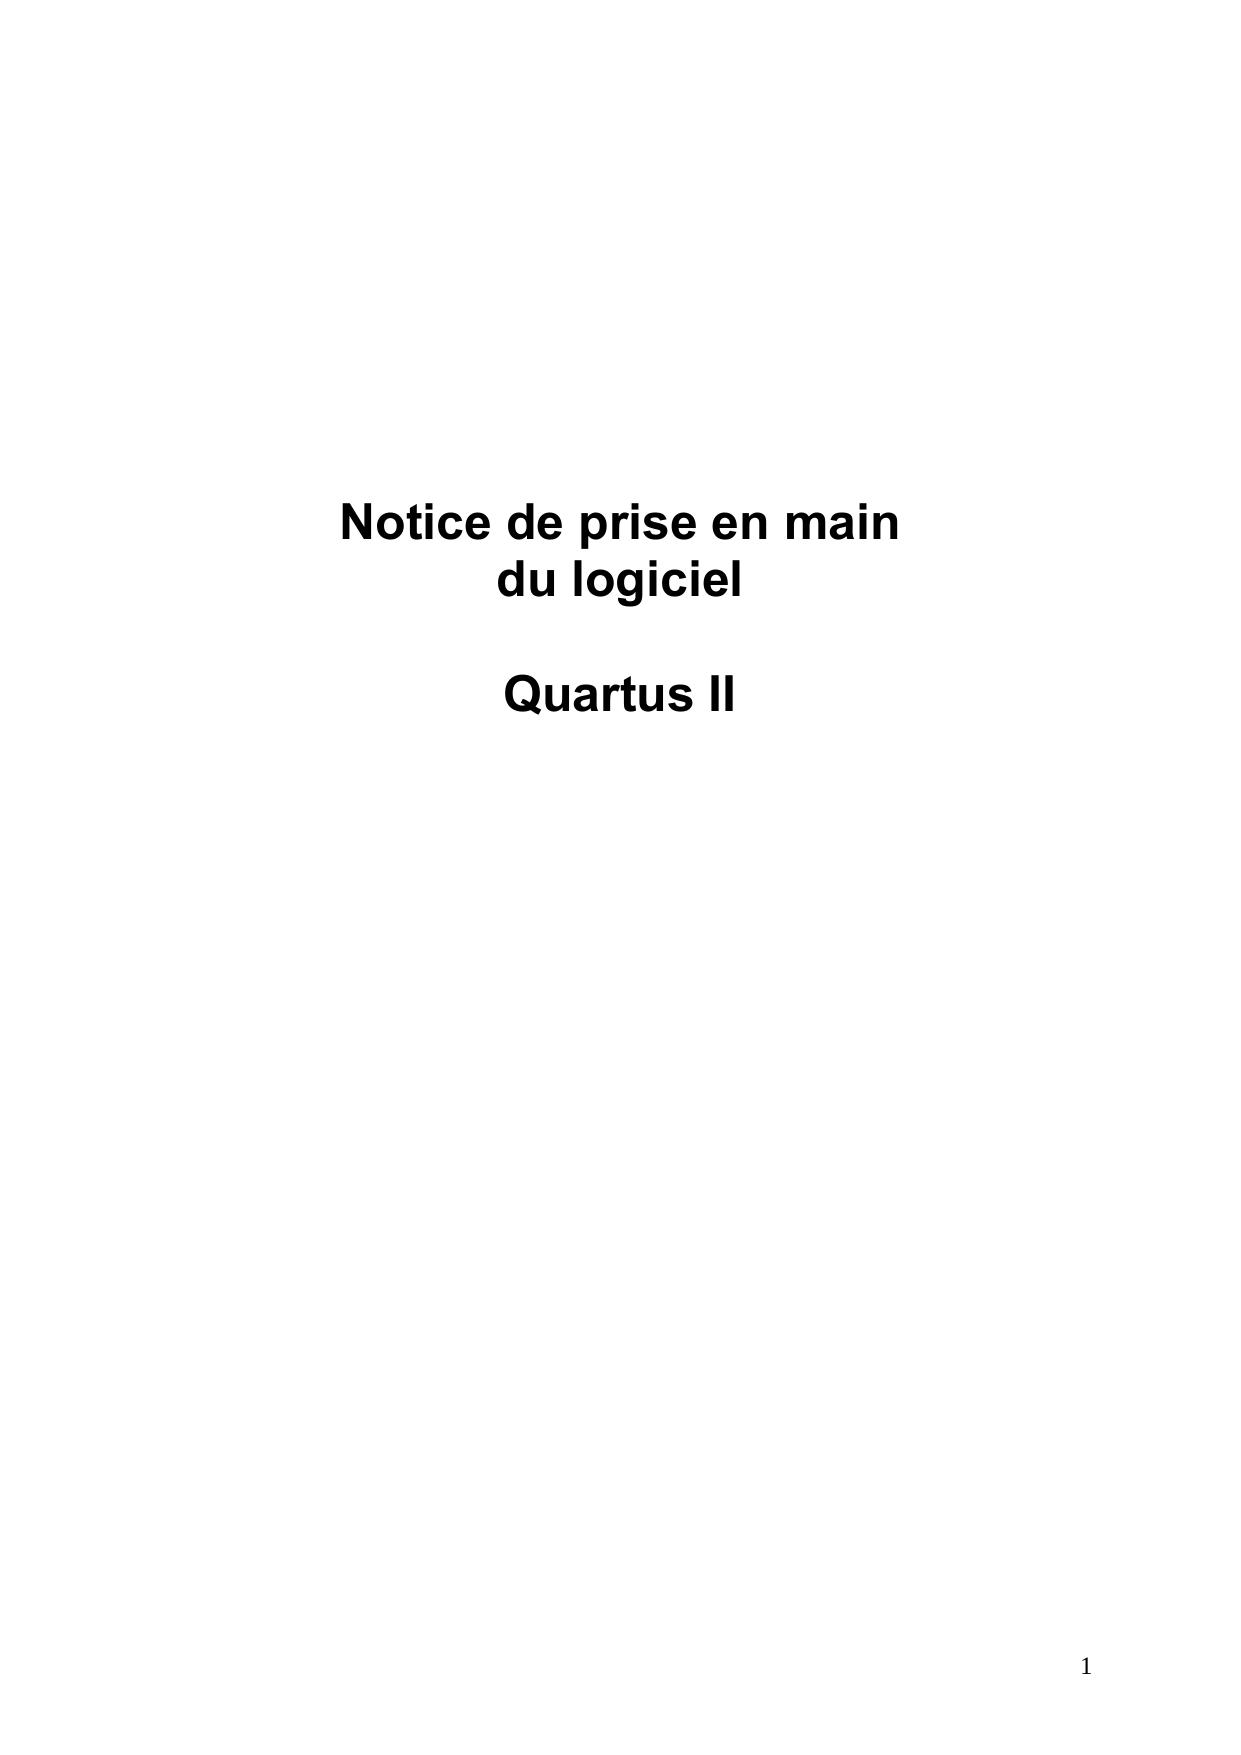 Microsoft Word - Notice Quartus.doc by Pravo